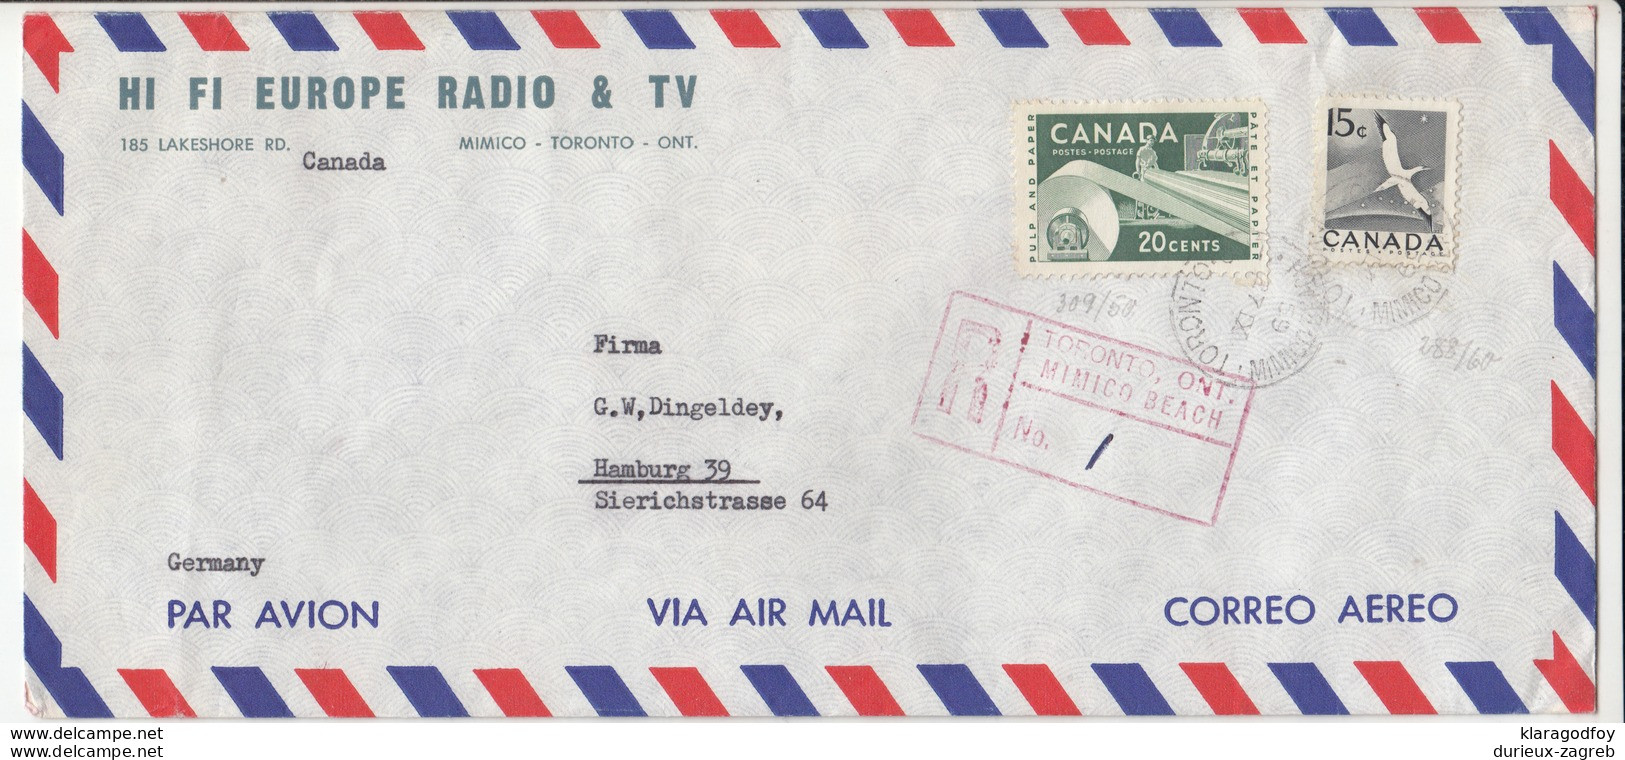 Canada, Hi Fi Europe Radio & TV Airmail Letter Cover Registered Travelled 1965 Toronto Pmk B180205 - Brieven En Documenten